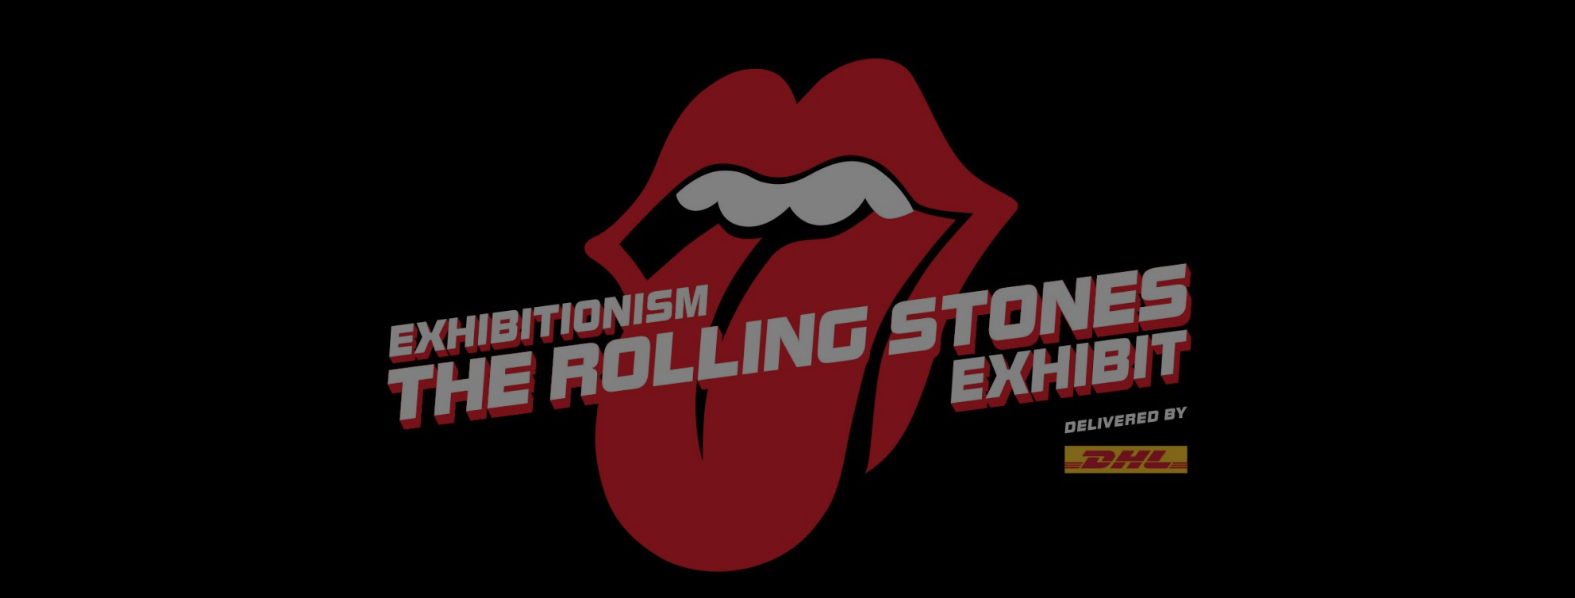 Exhibitionism – THE ROLLING STONES